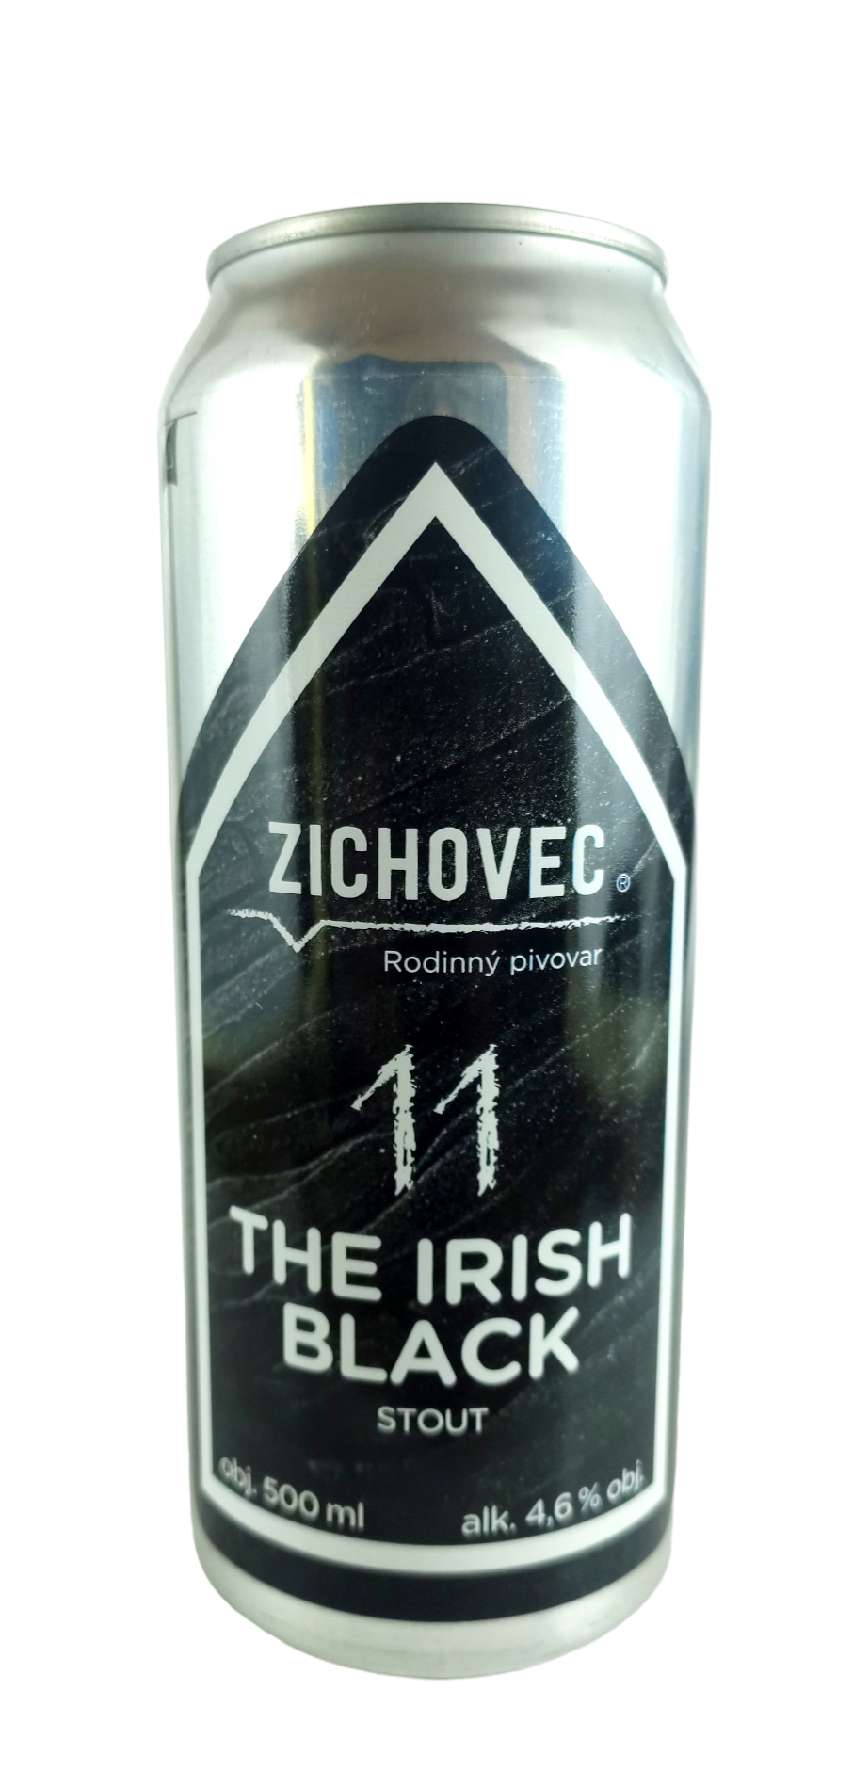 Zichovec The Irish Black stout 11°